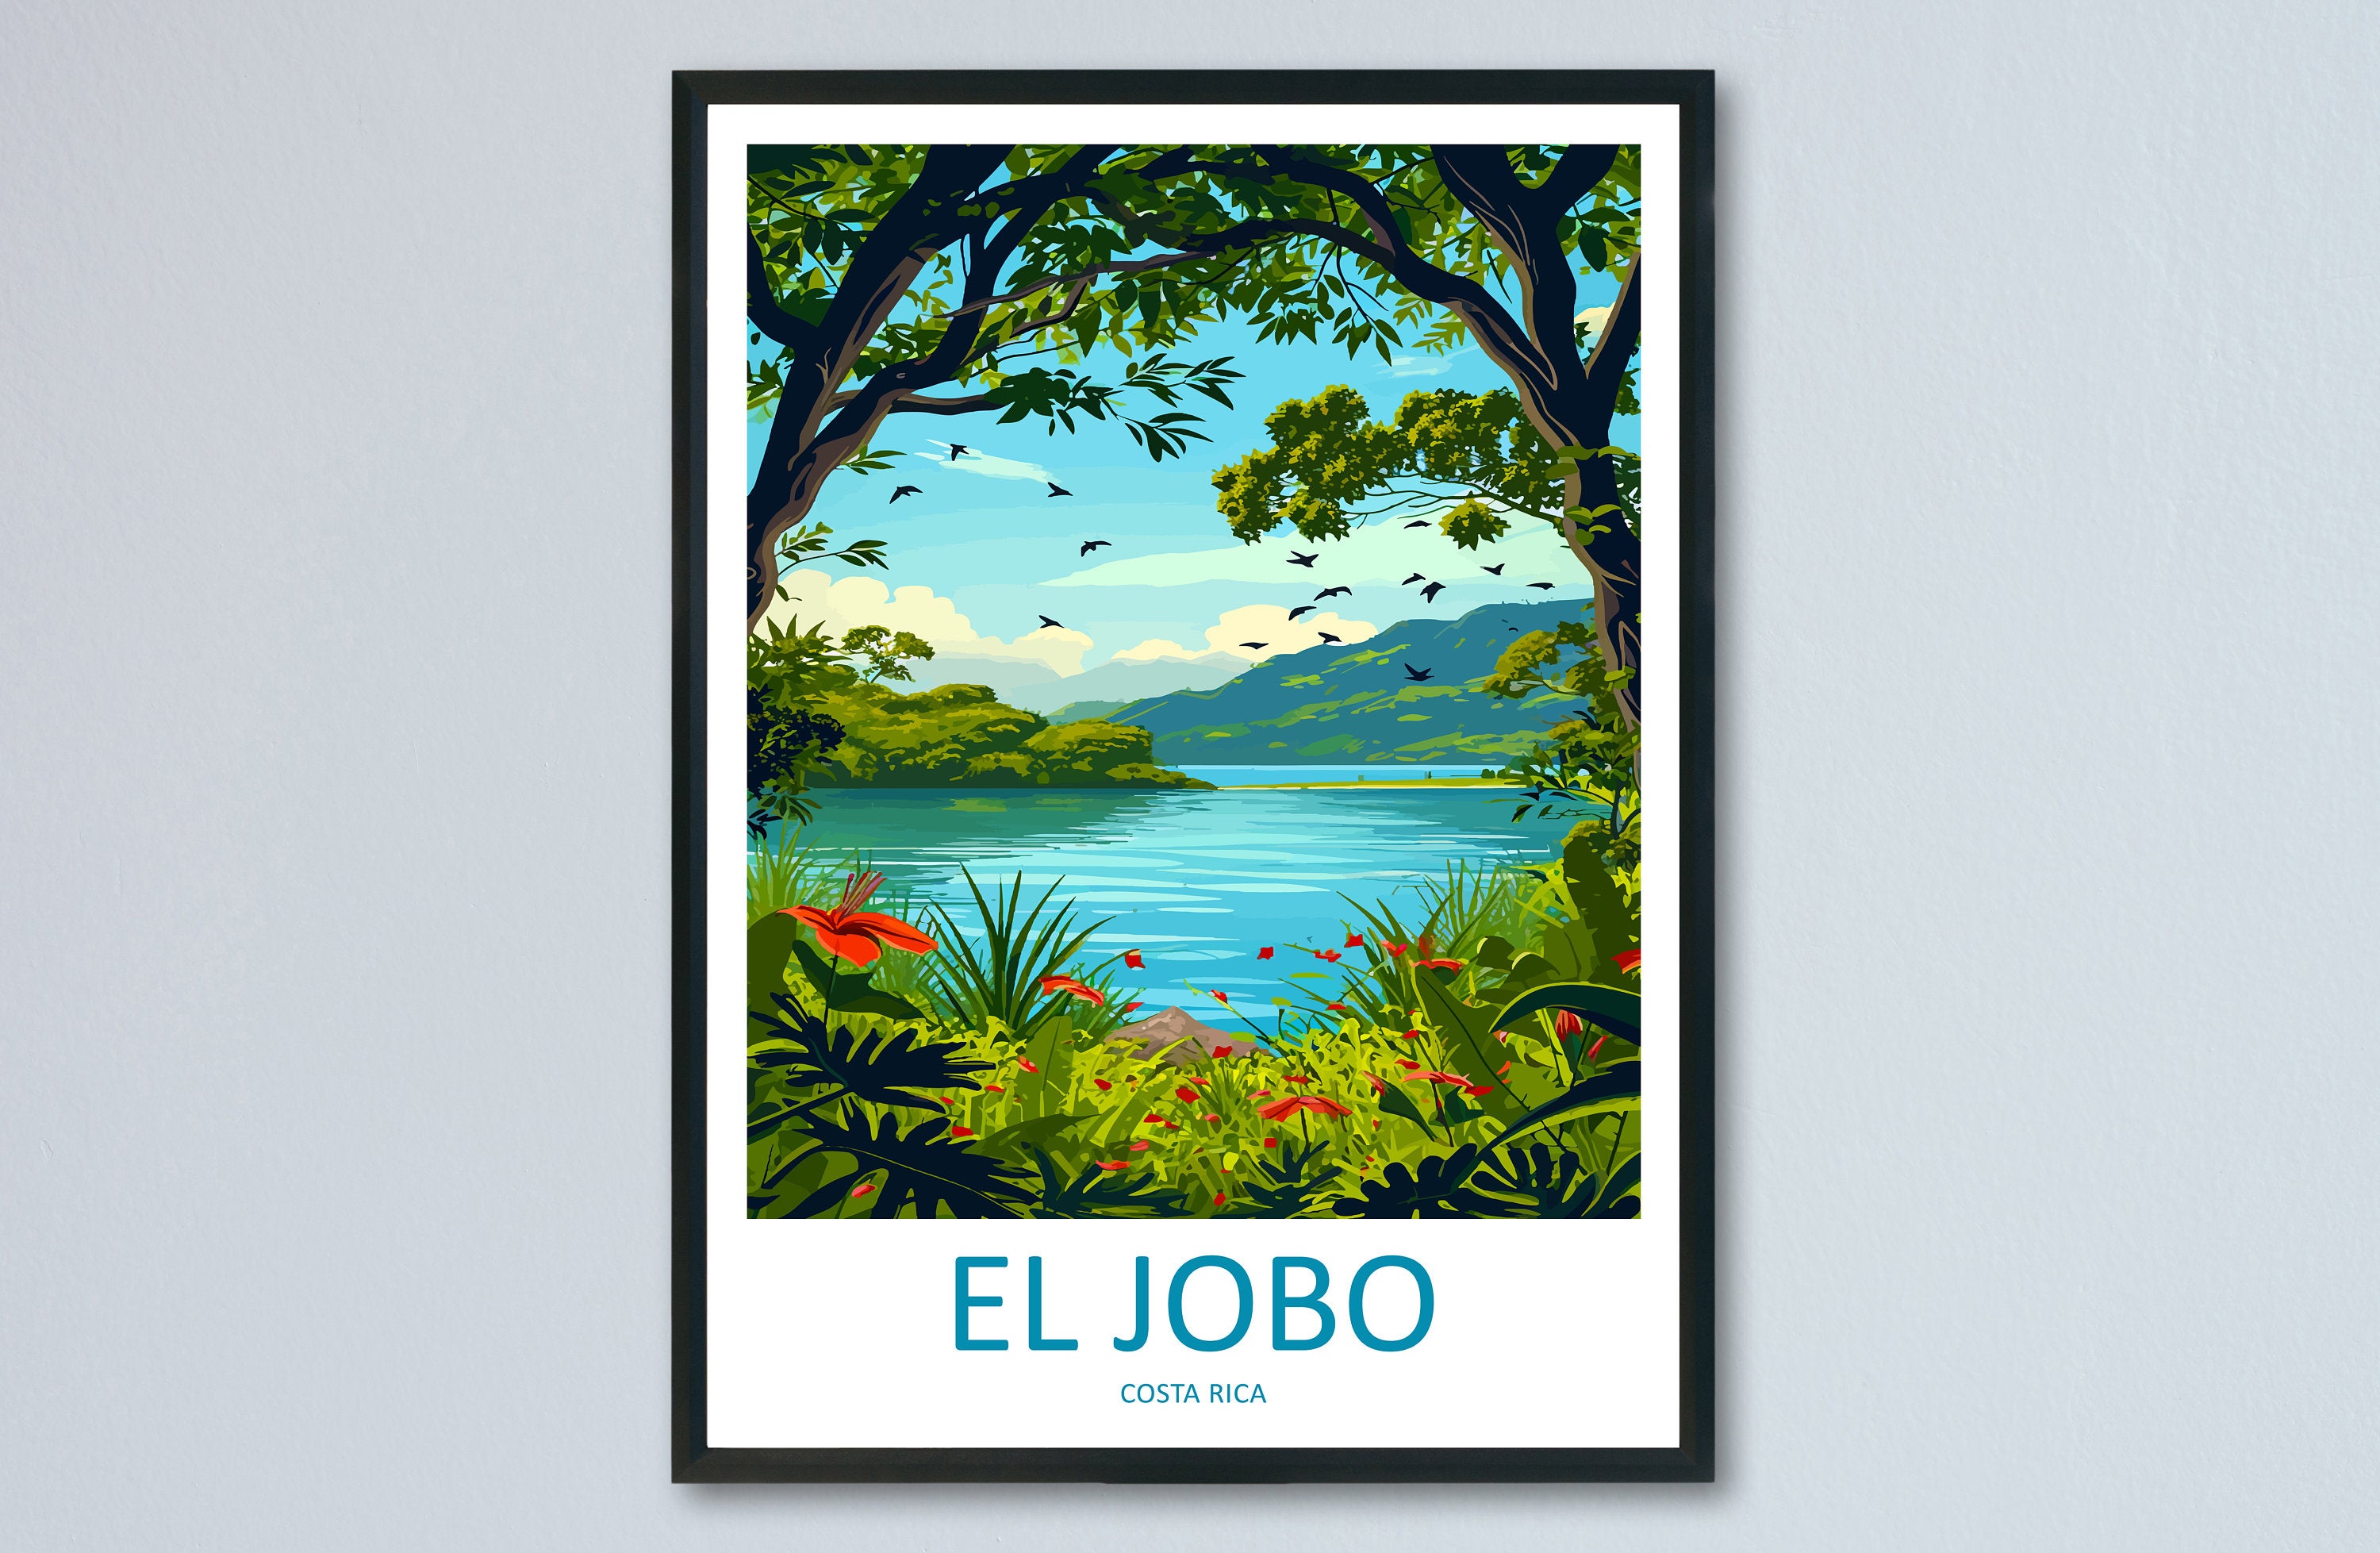 El Jobo Travel Print Wall Art El Jobo Wall Hanging Home Décor El Jobo Gift Art Lovers Costa Rica El Jobo